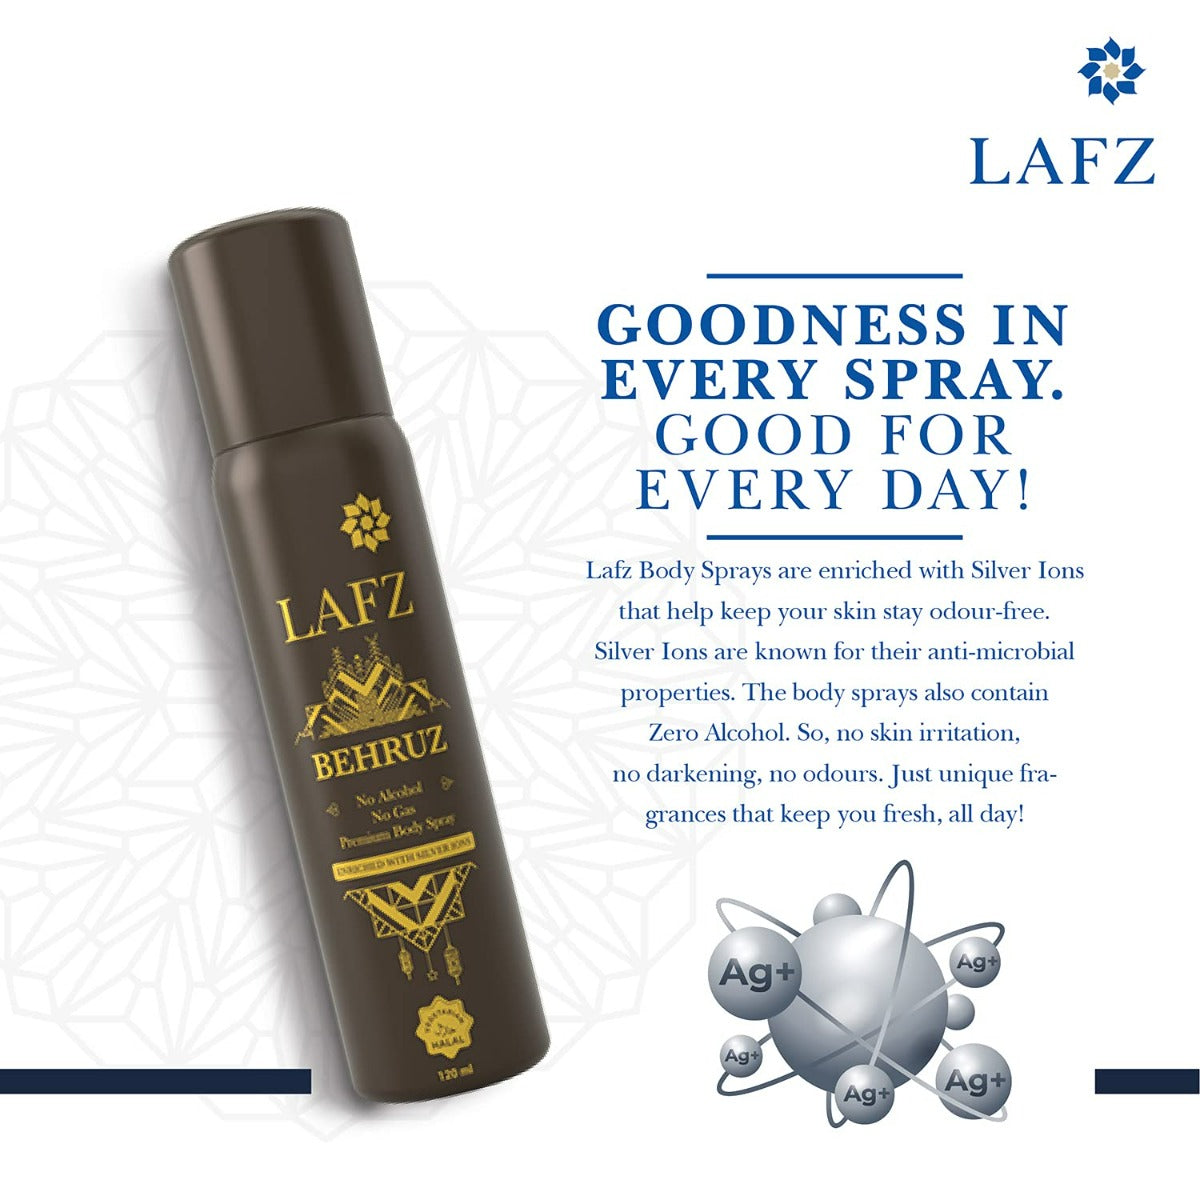 Lafz Men and Women Body Spray Combo